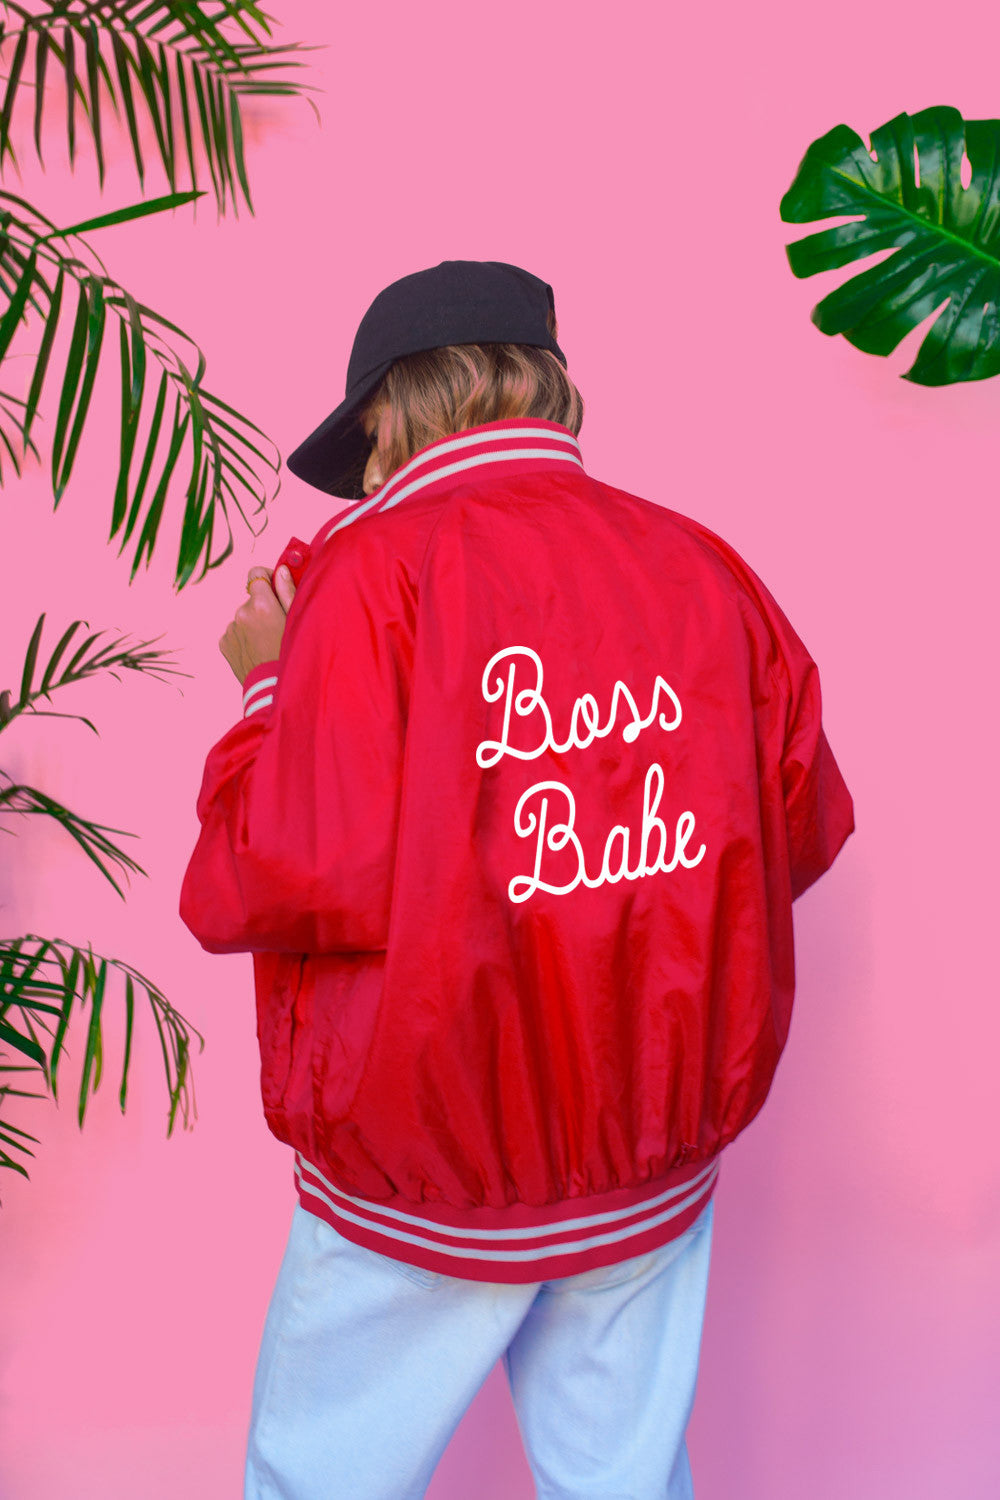 boss babe jacket